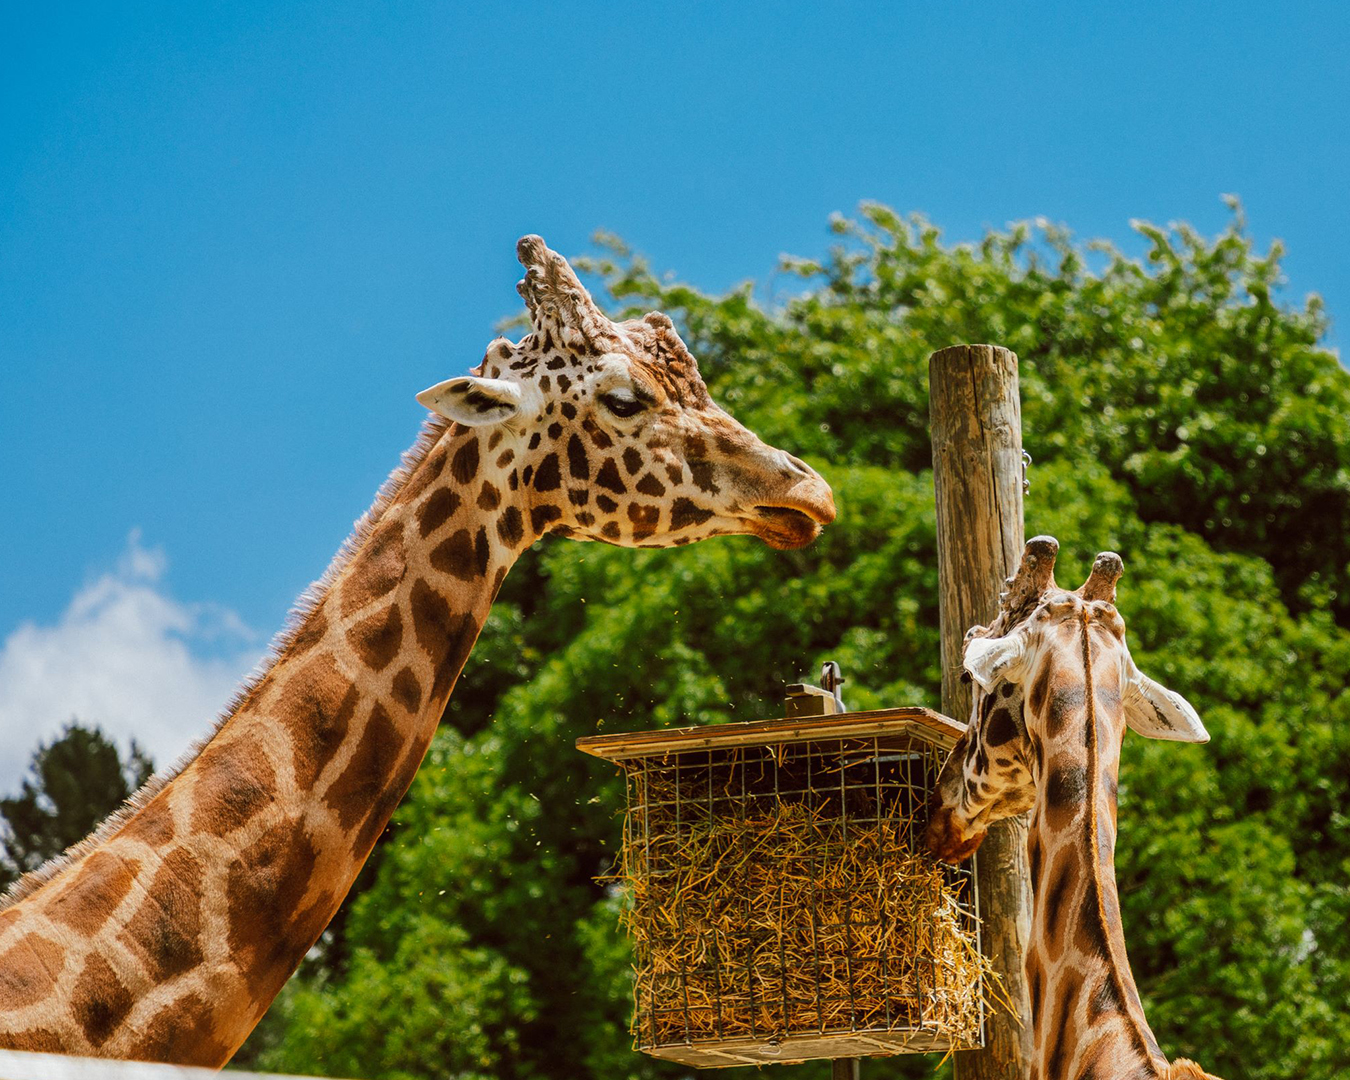 Giraffes have a feed at Hamilton Zoo.